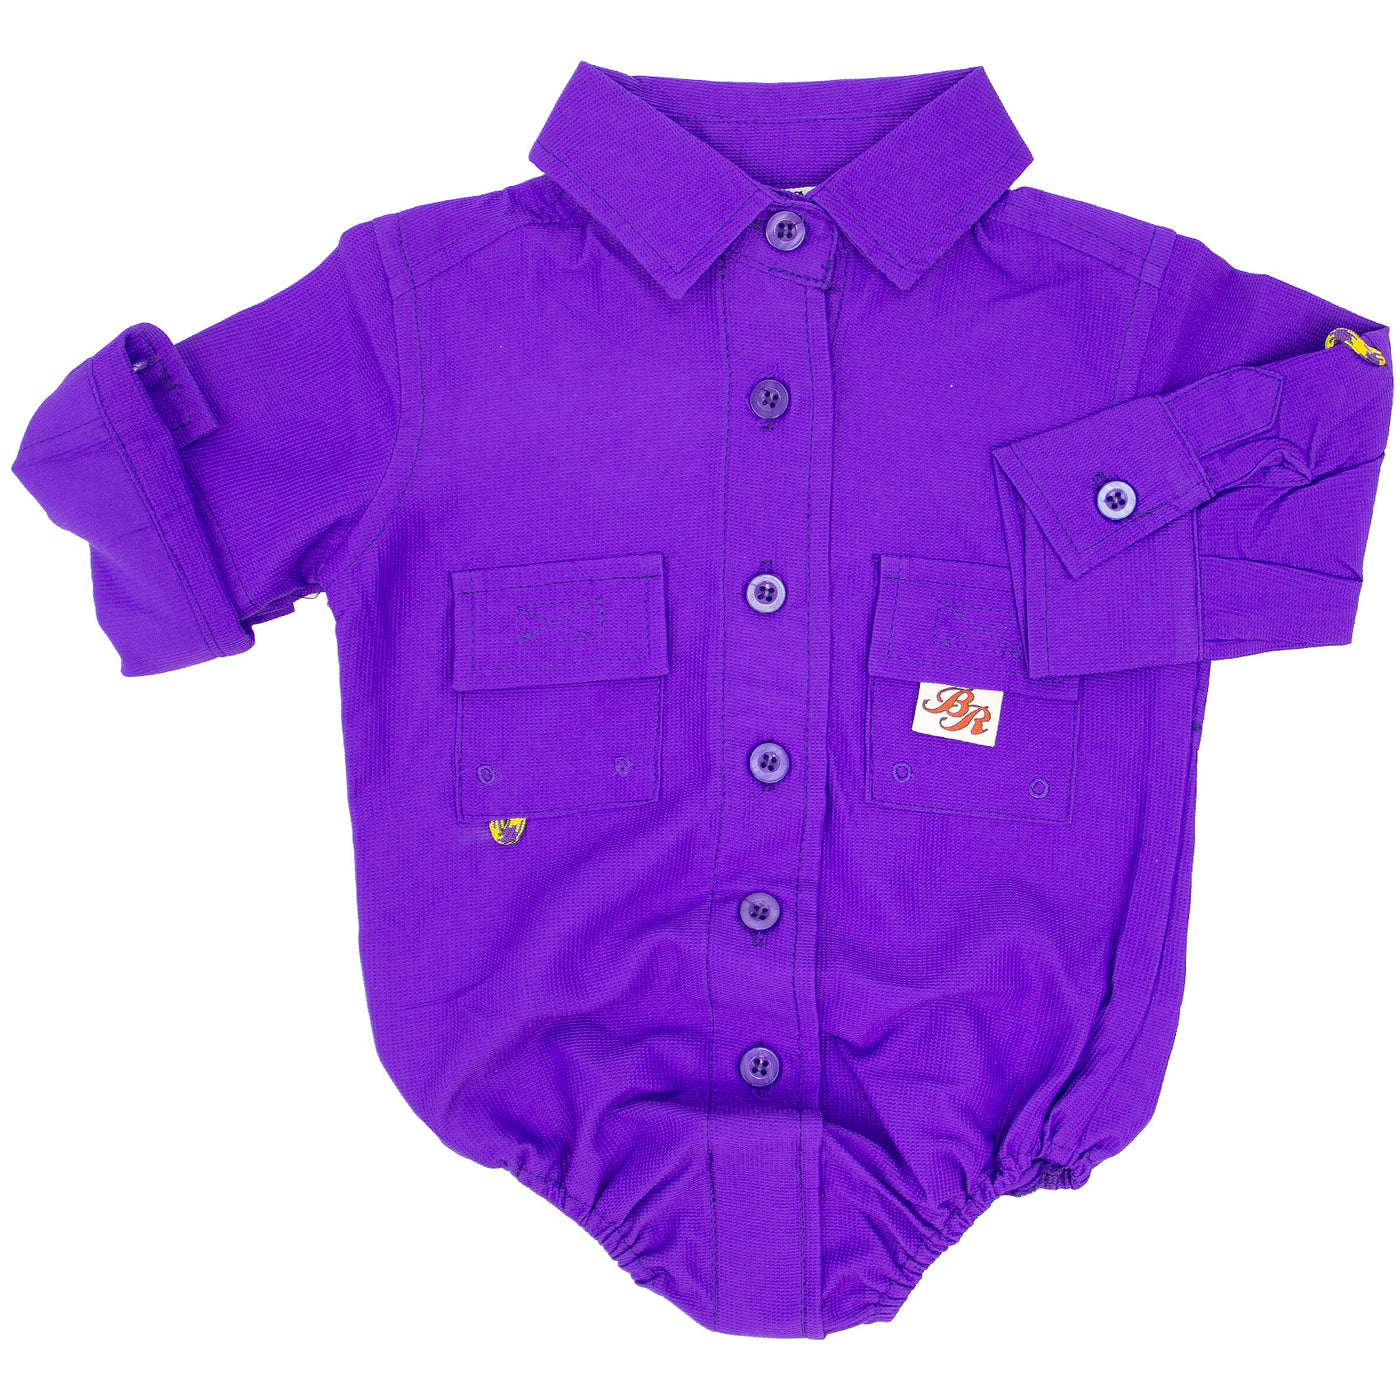 BullRed Clothing BullRed unisex One Piece Onesie Fishing Shirt Pink Size 12M, Infant Unisex, Size: 12 Months